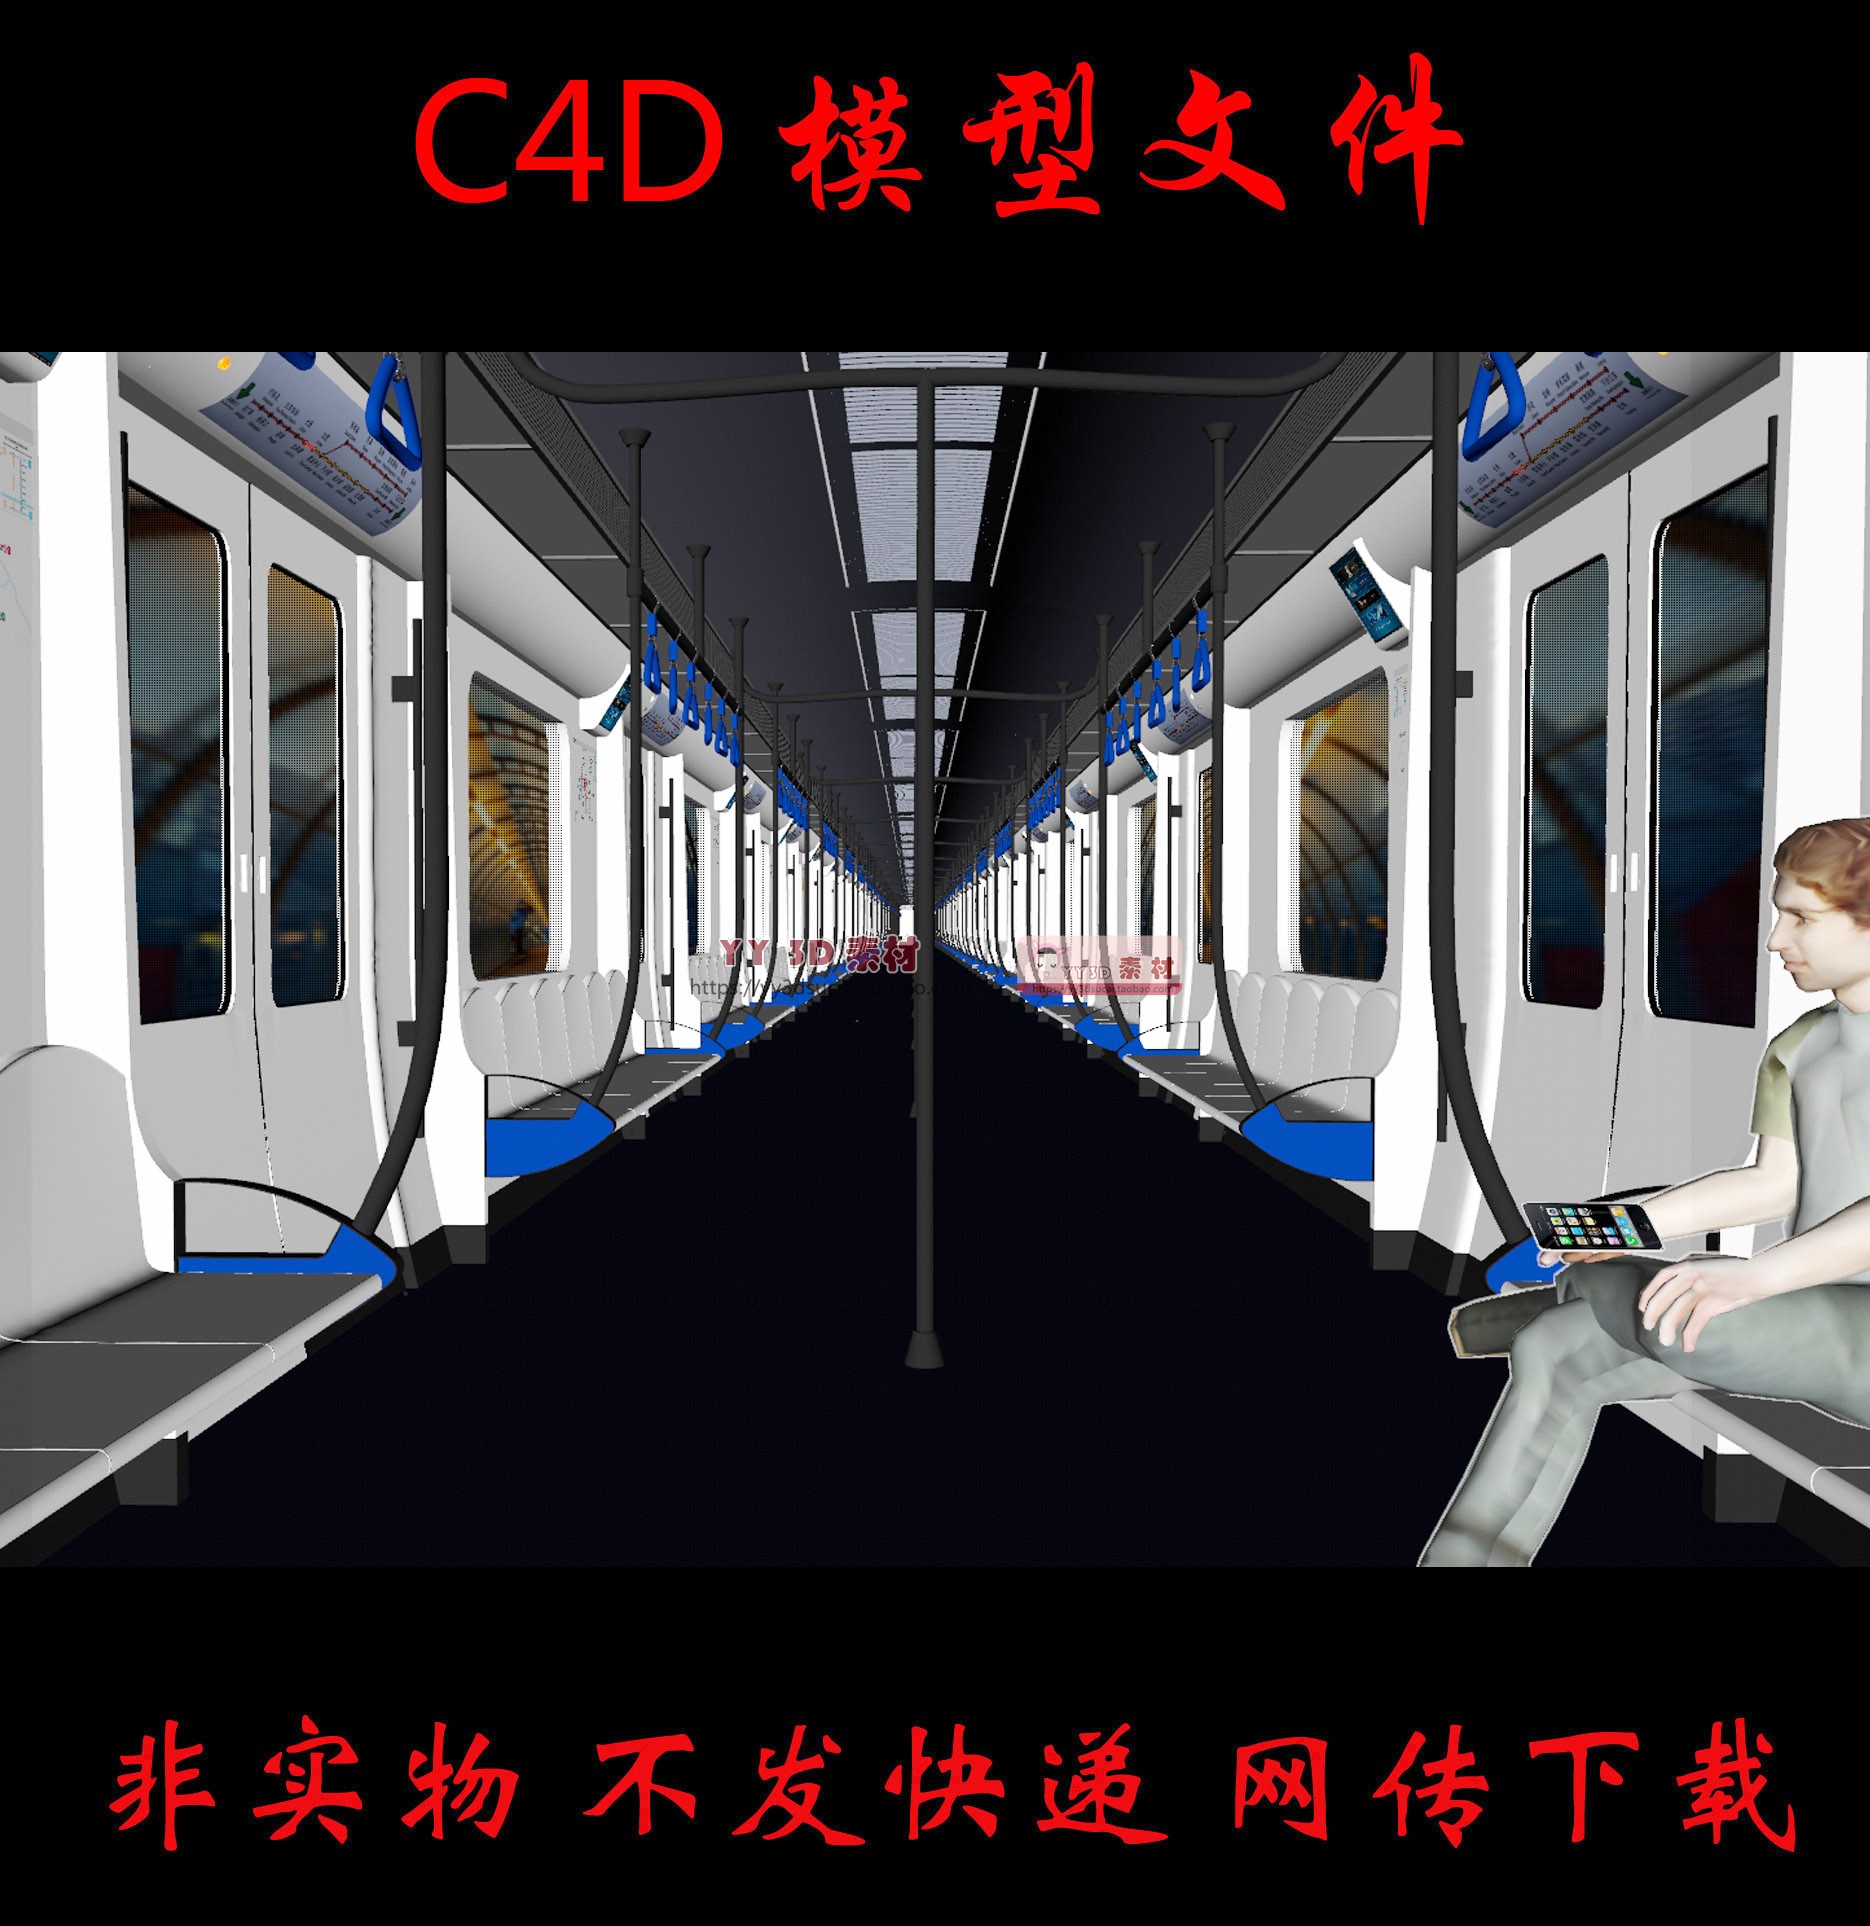 【c0019】地铁内部c4d模型文件地铁车厢内部fbx地铁车厢内部c4d模